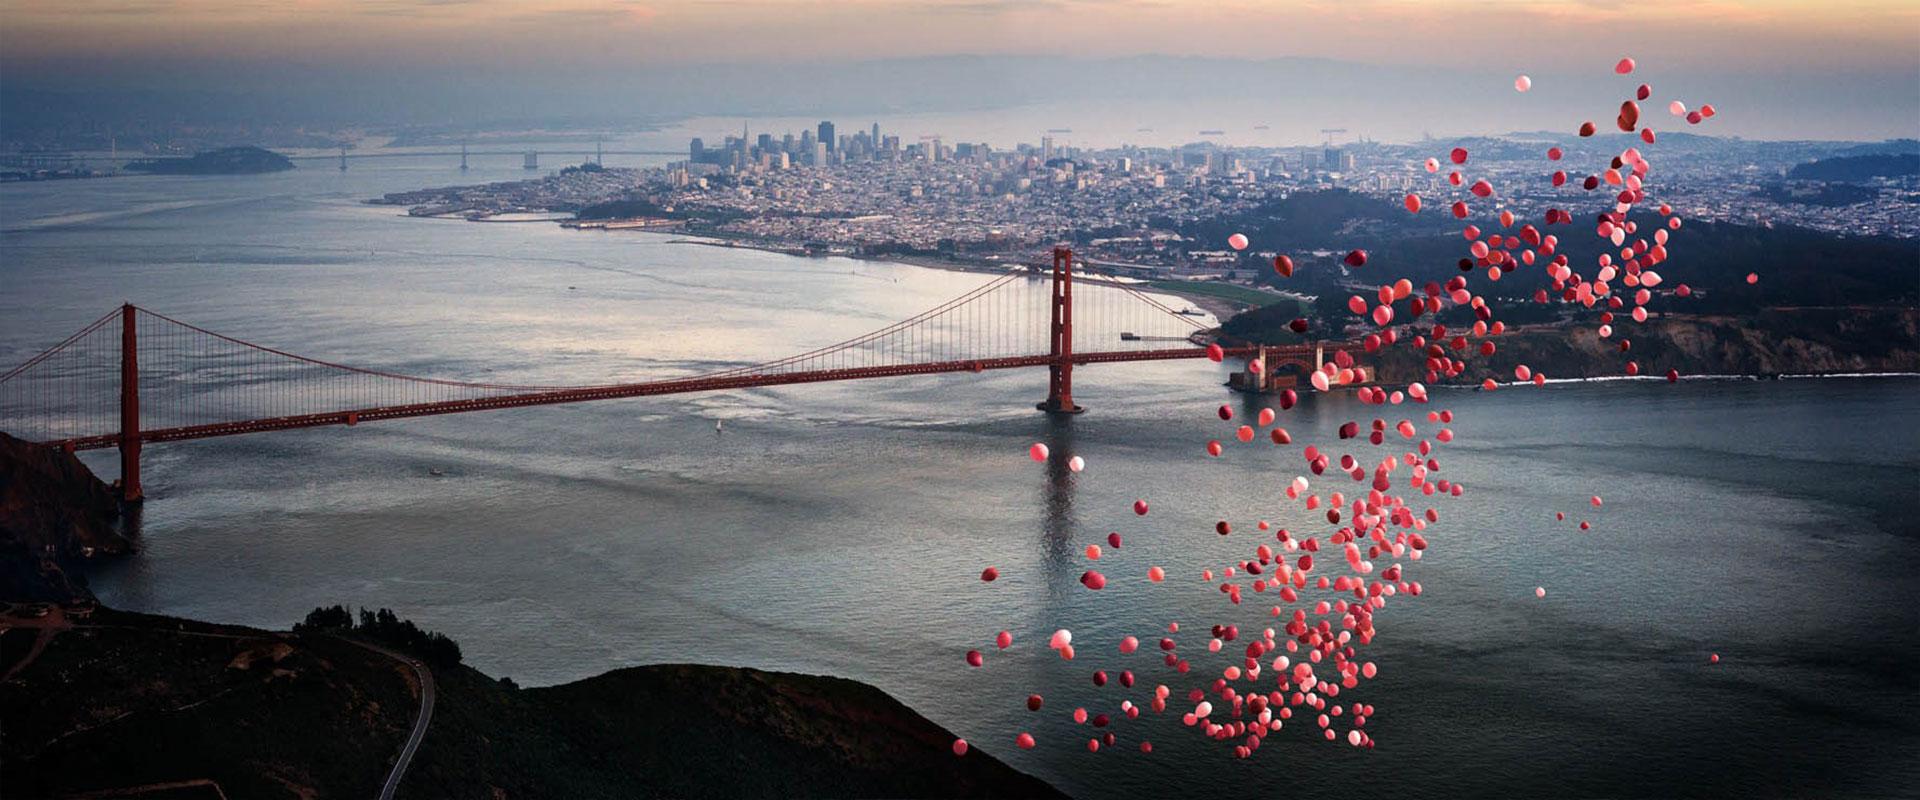 David Drebin Figurative Photograph - Ballons over San Francisco